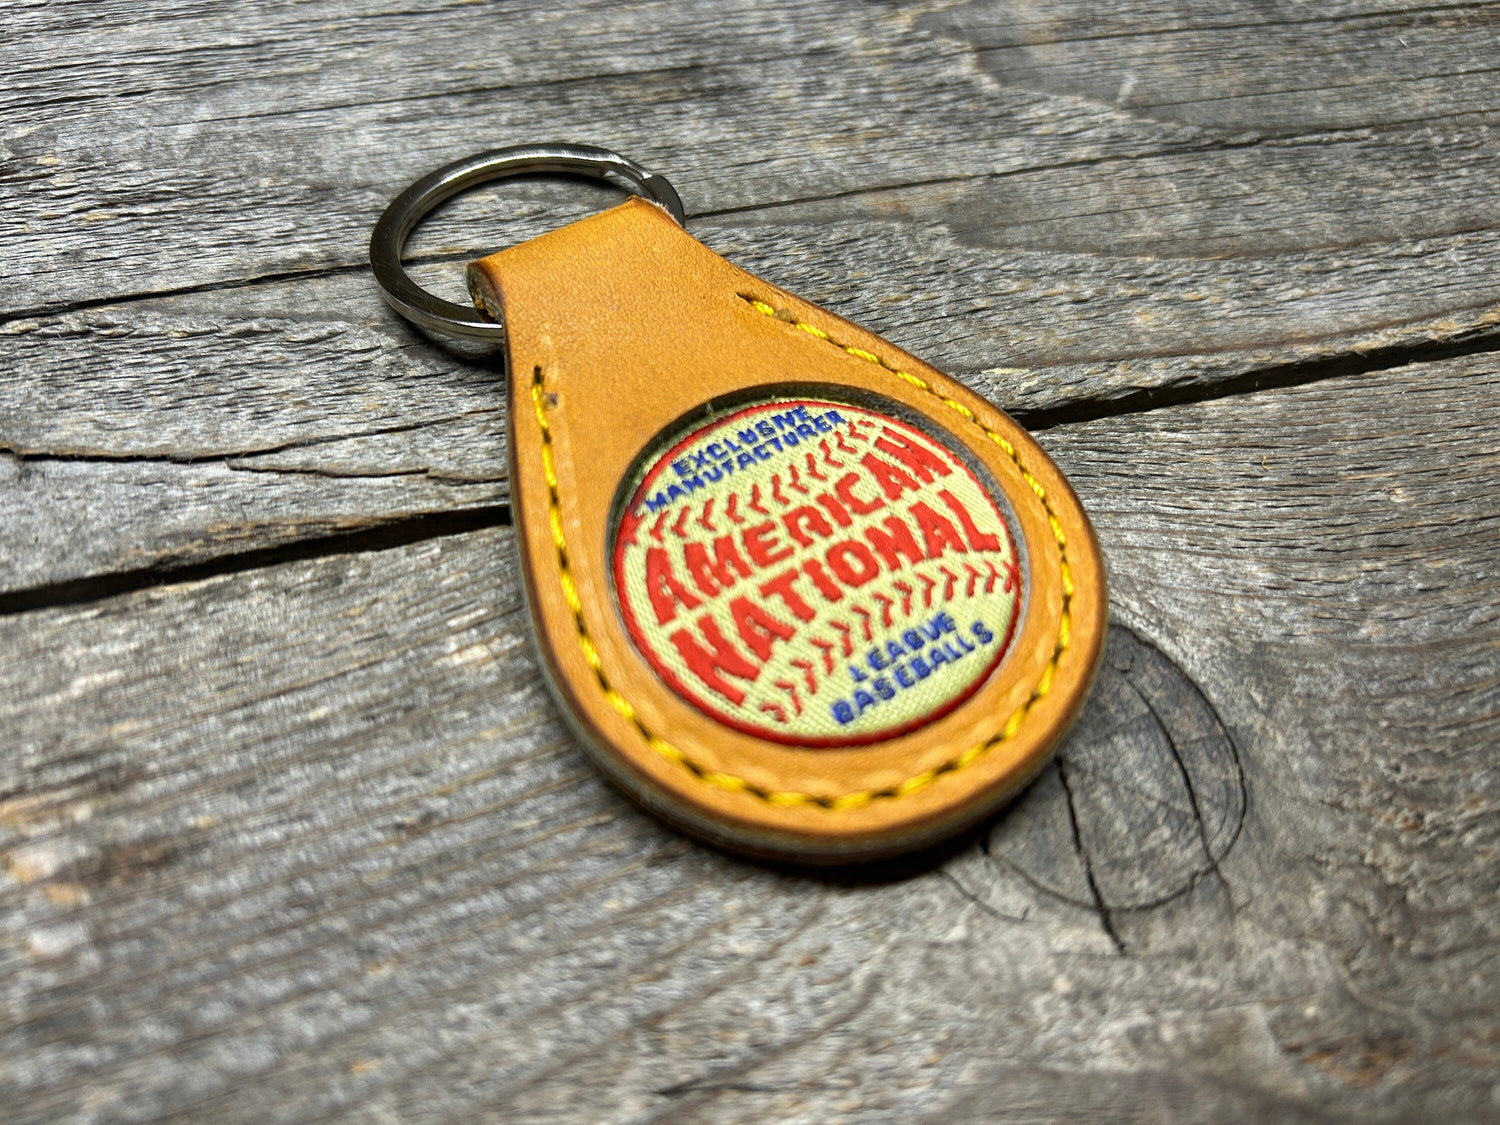 New Item! Vintage Spalding American/National League Baseball Glove Key Chain!